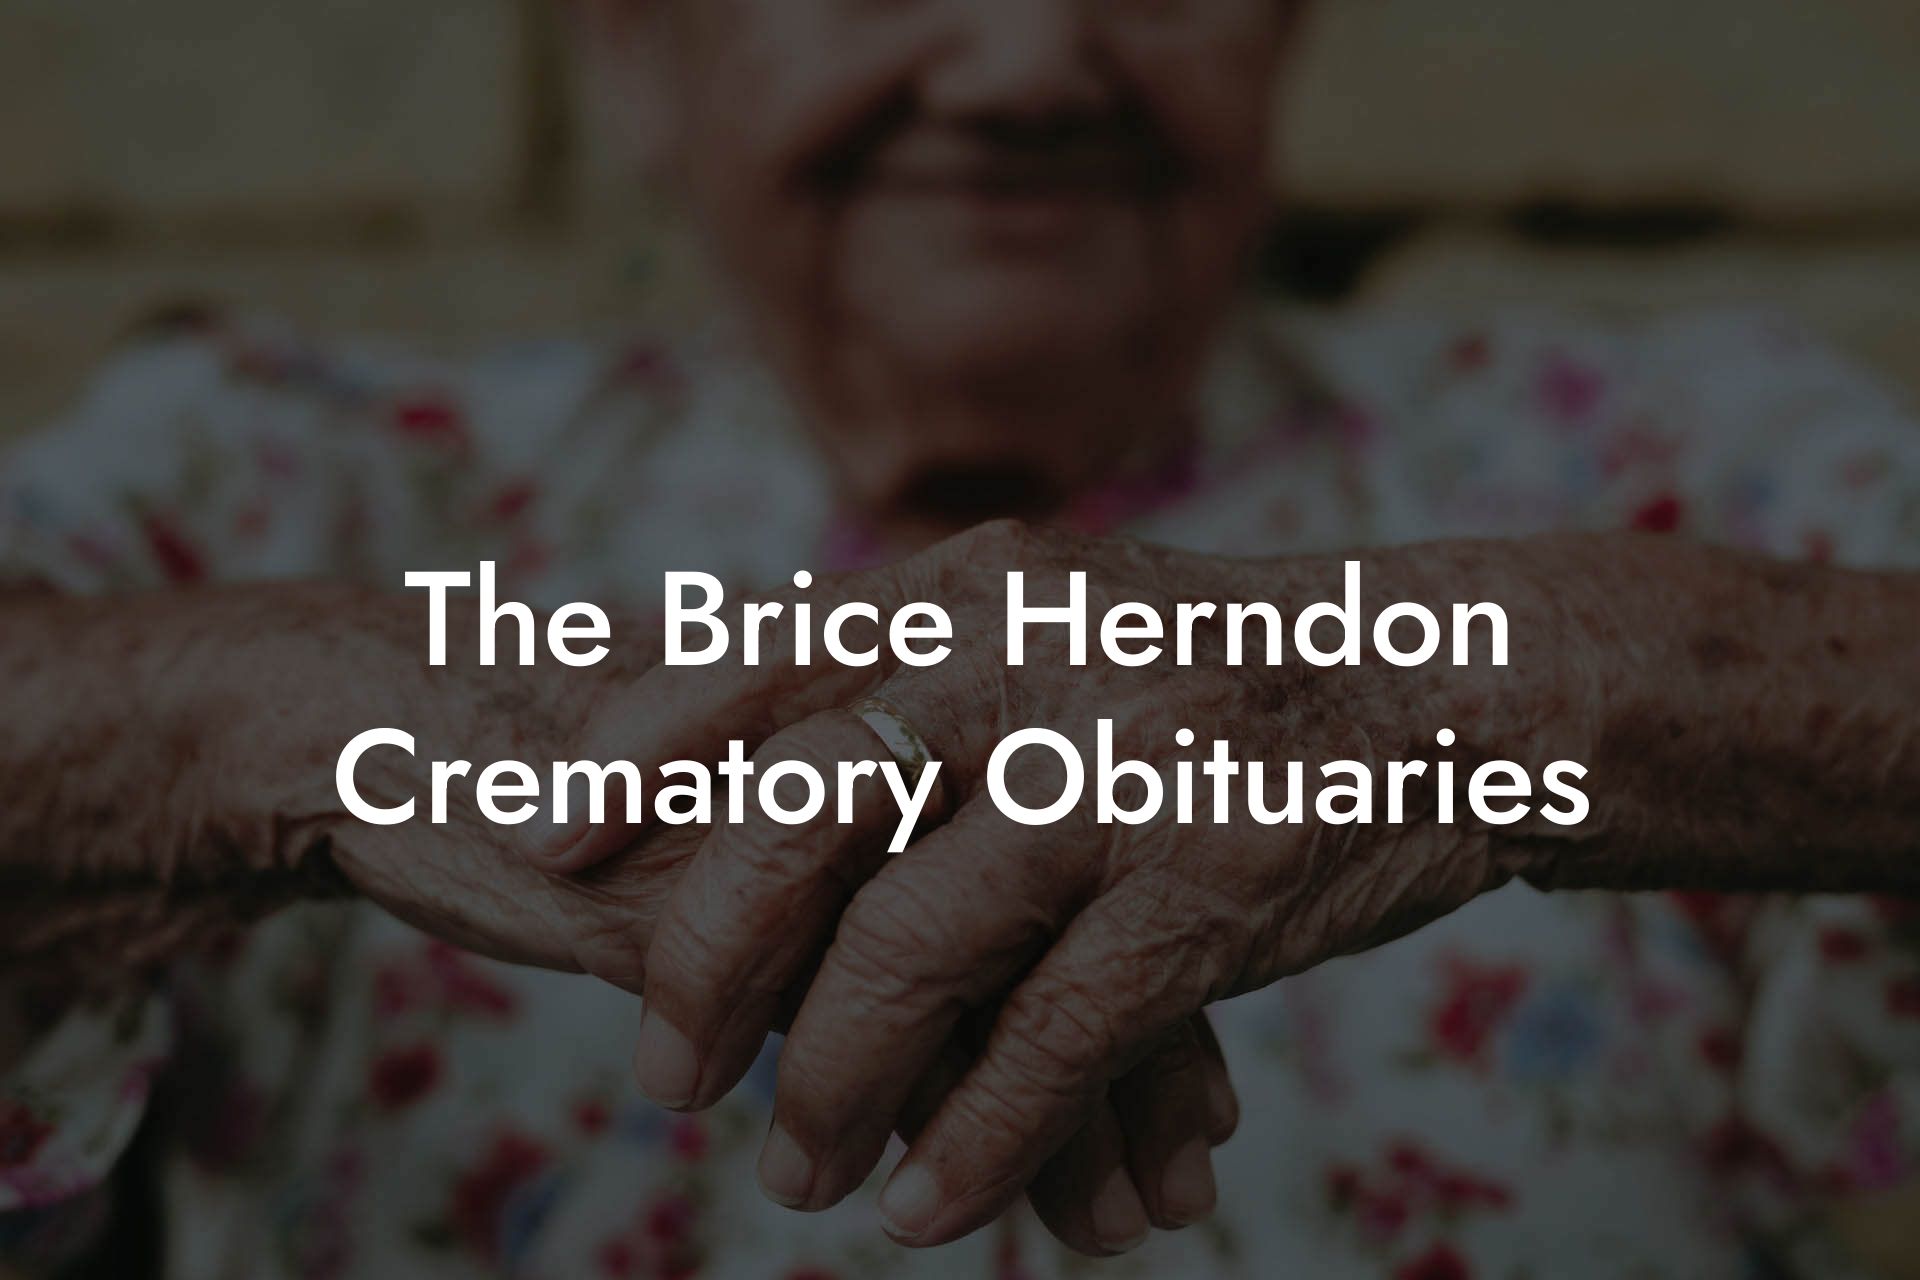 The Brice Herndon Crematory Obituaries